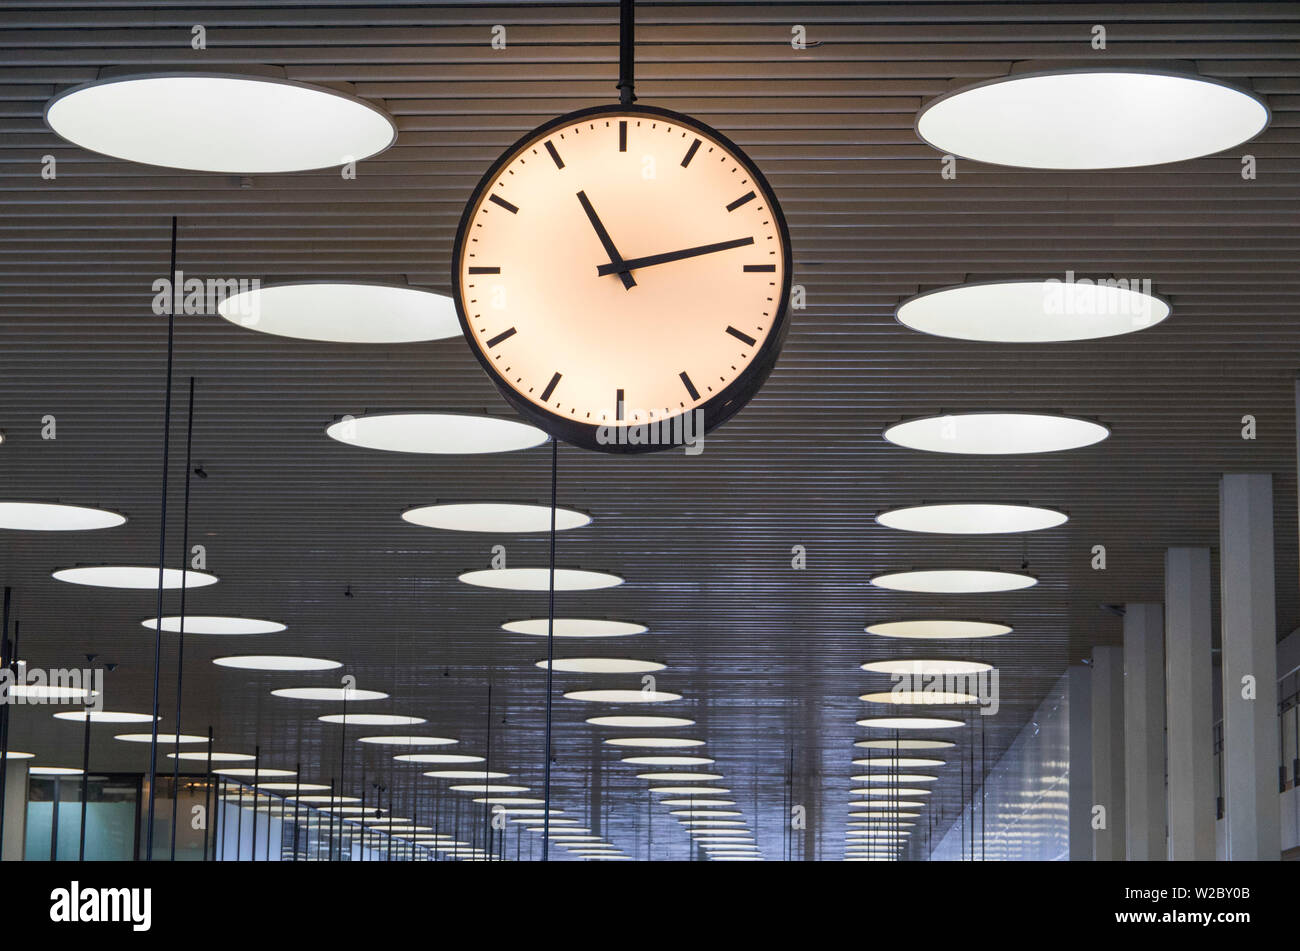 Dänemark, Zealand, Kopenhagen, Kopenhagen Intertnational Flughafen, Innere des Terminal 2 mit Uhr Stockfoto